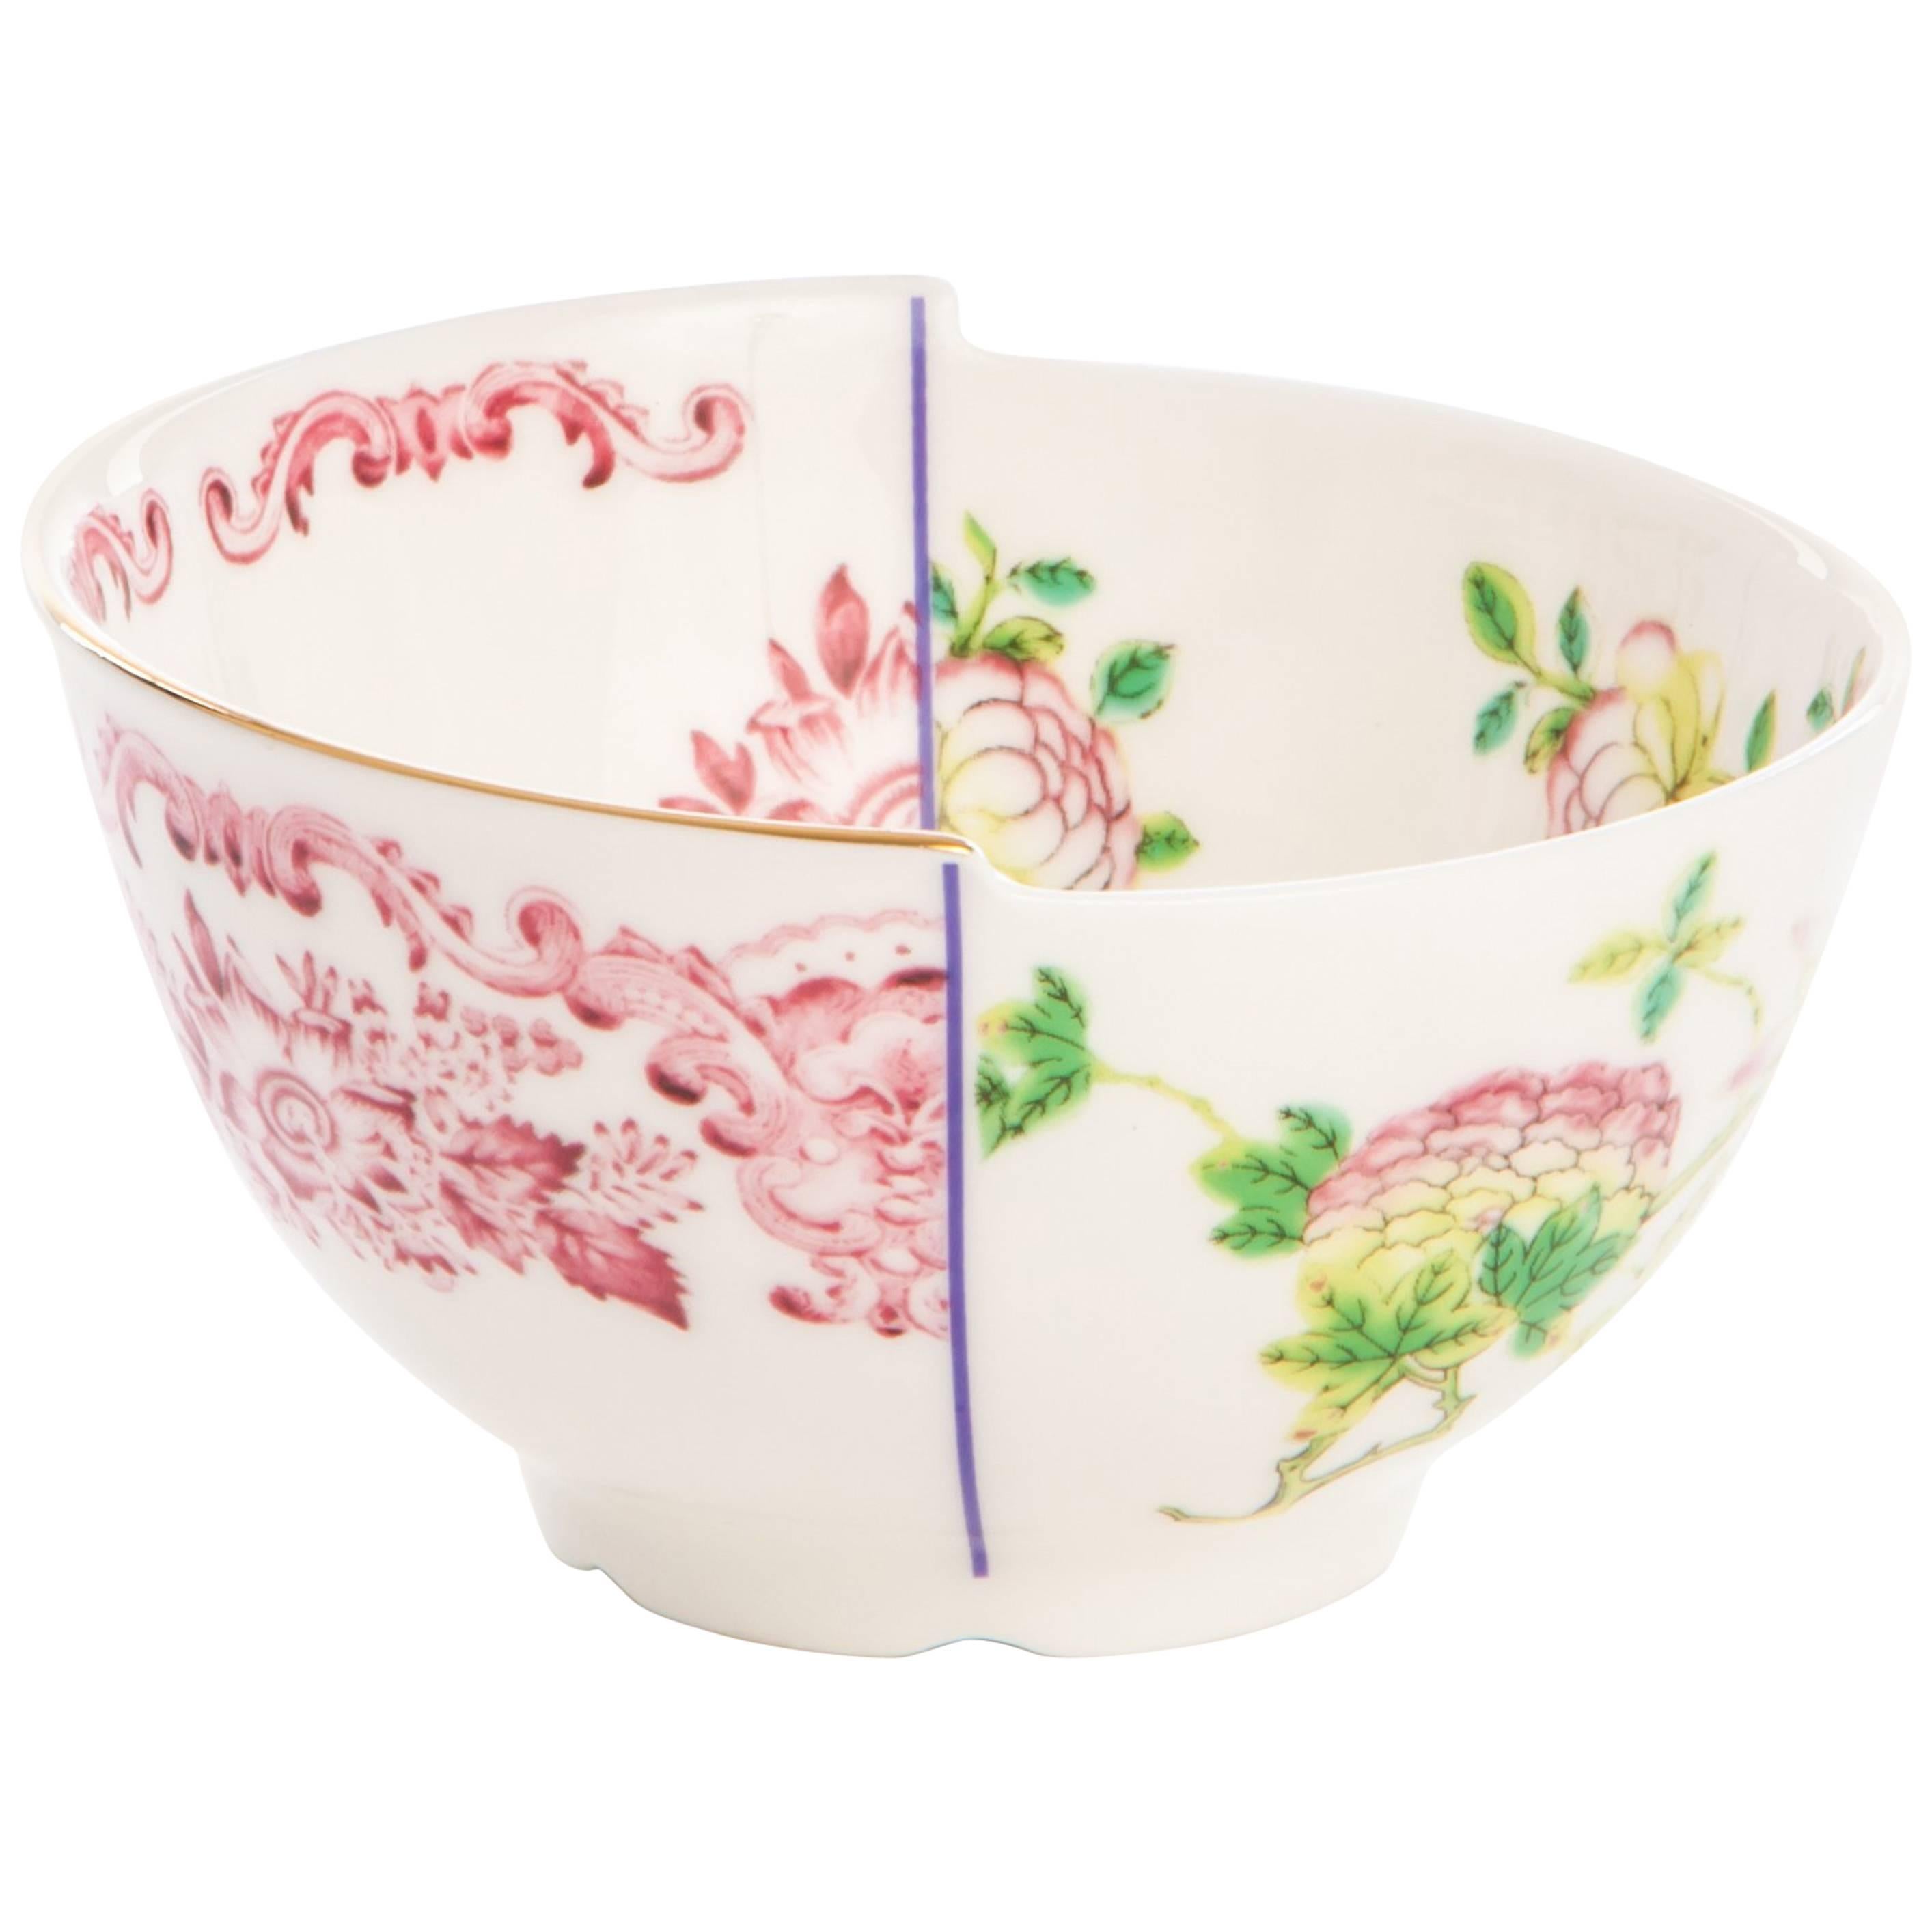 Seletti "Hybrid-Olinda" Porcelain Fruit Bowls